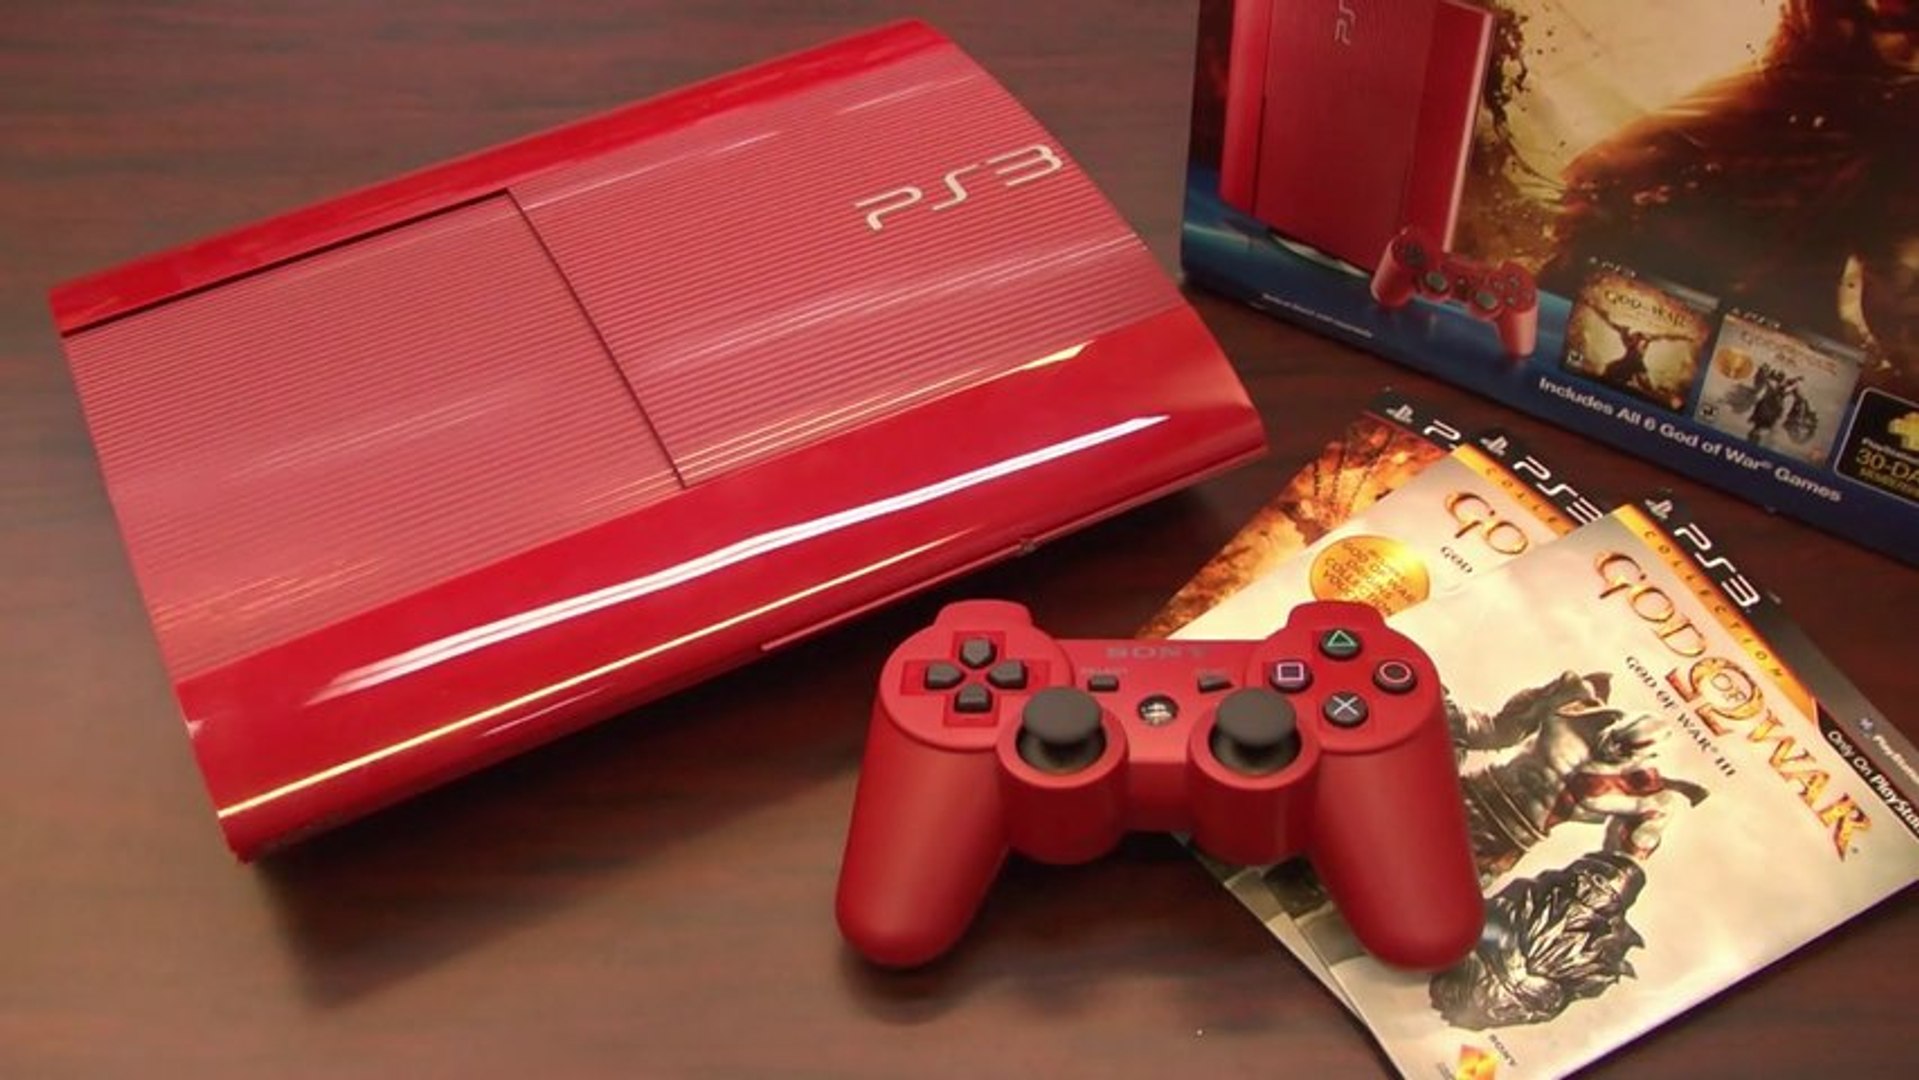 Ps3 2010. Ps3 super Slim Red. Плейстейшен 3 красный. PS 3 красная ps3. Ps3 super Slim Red геймпад.